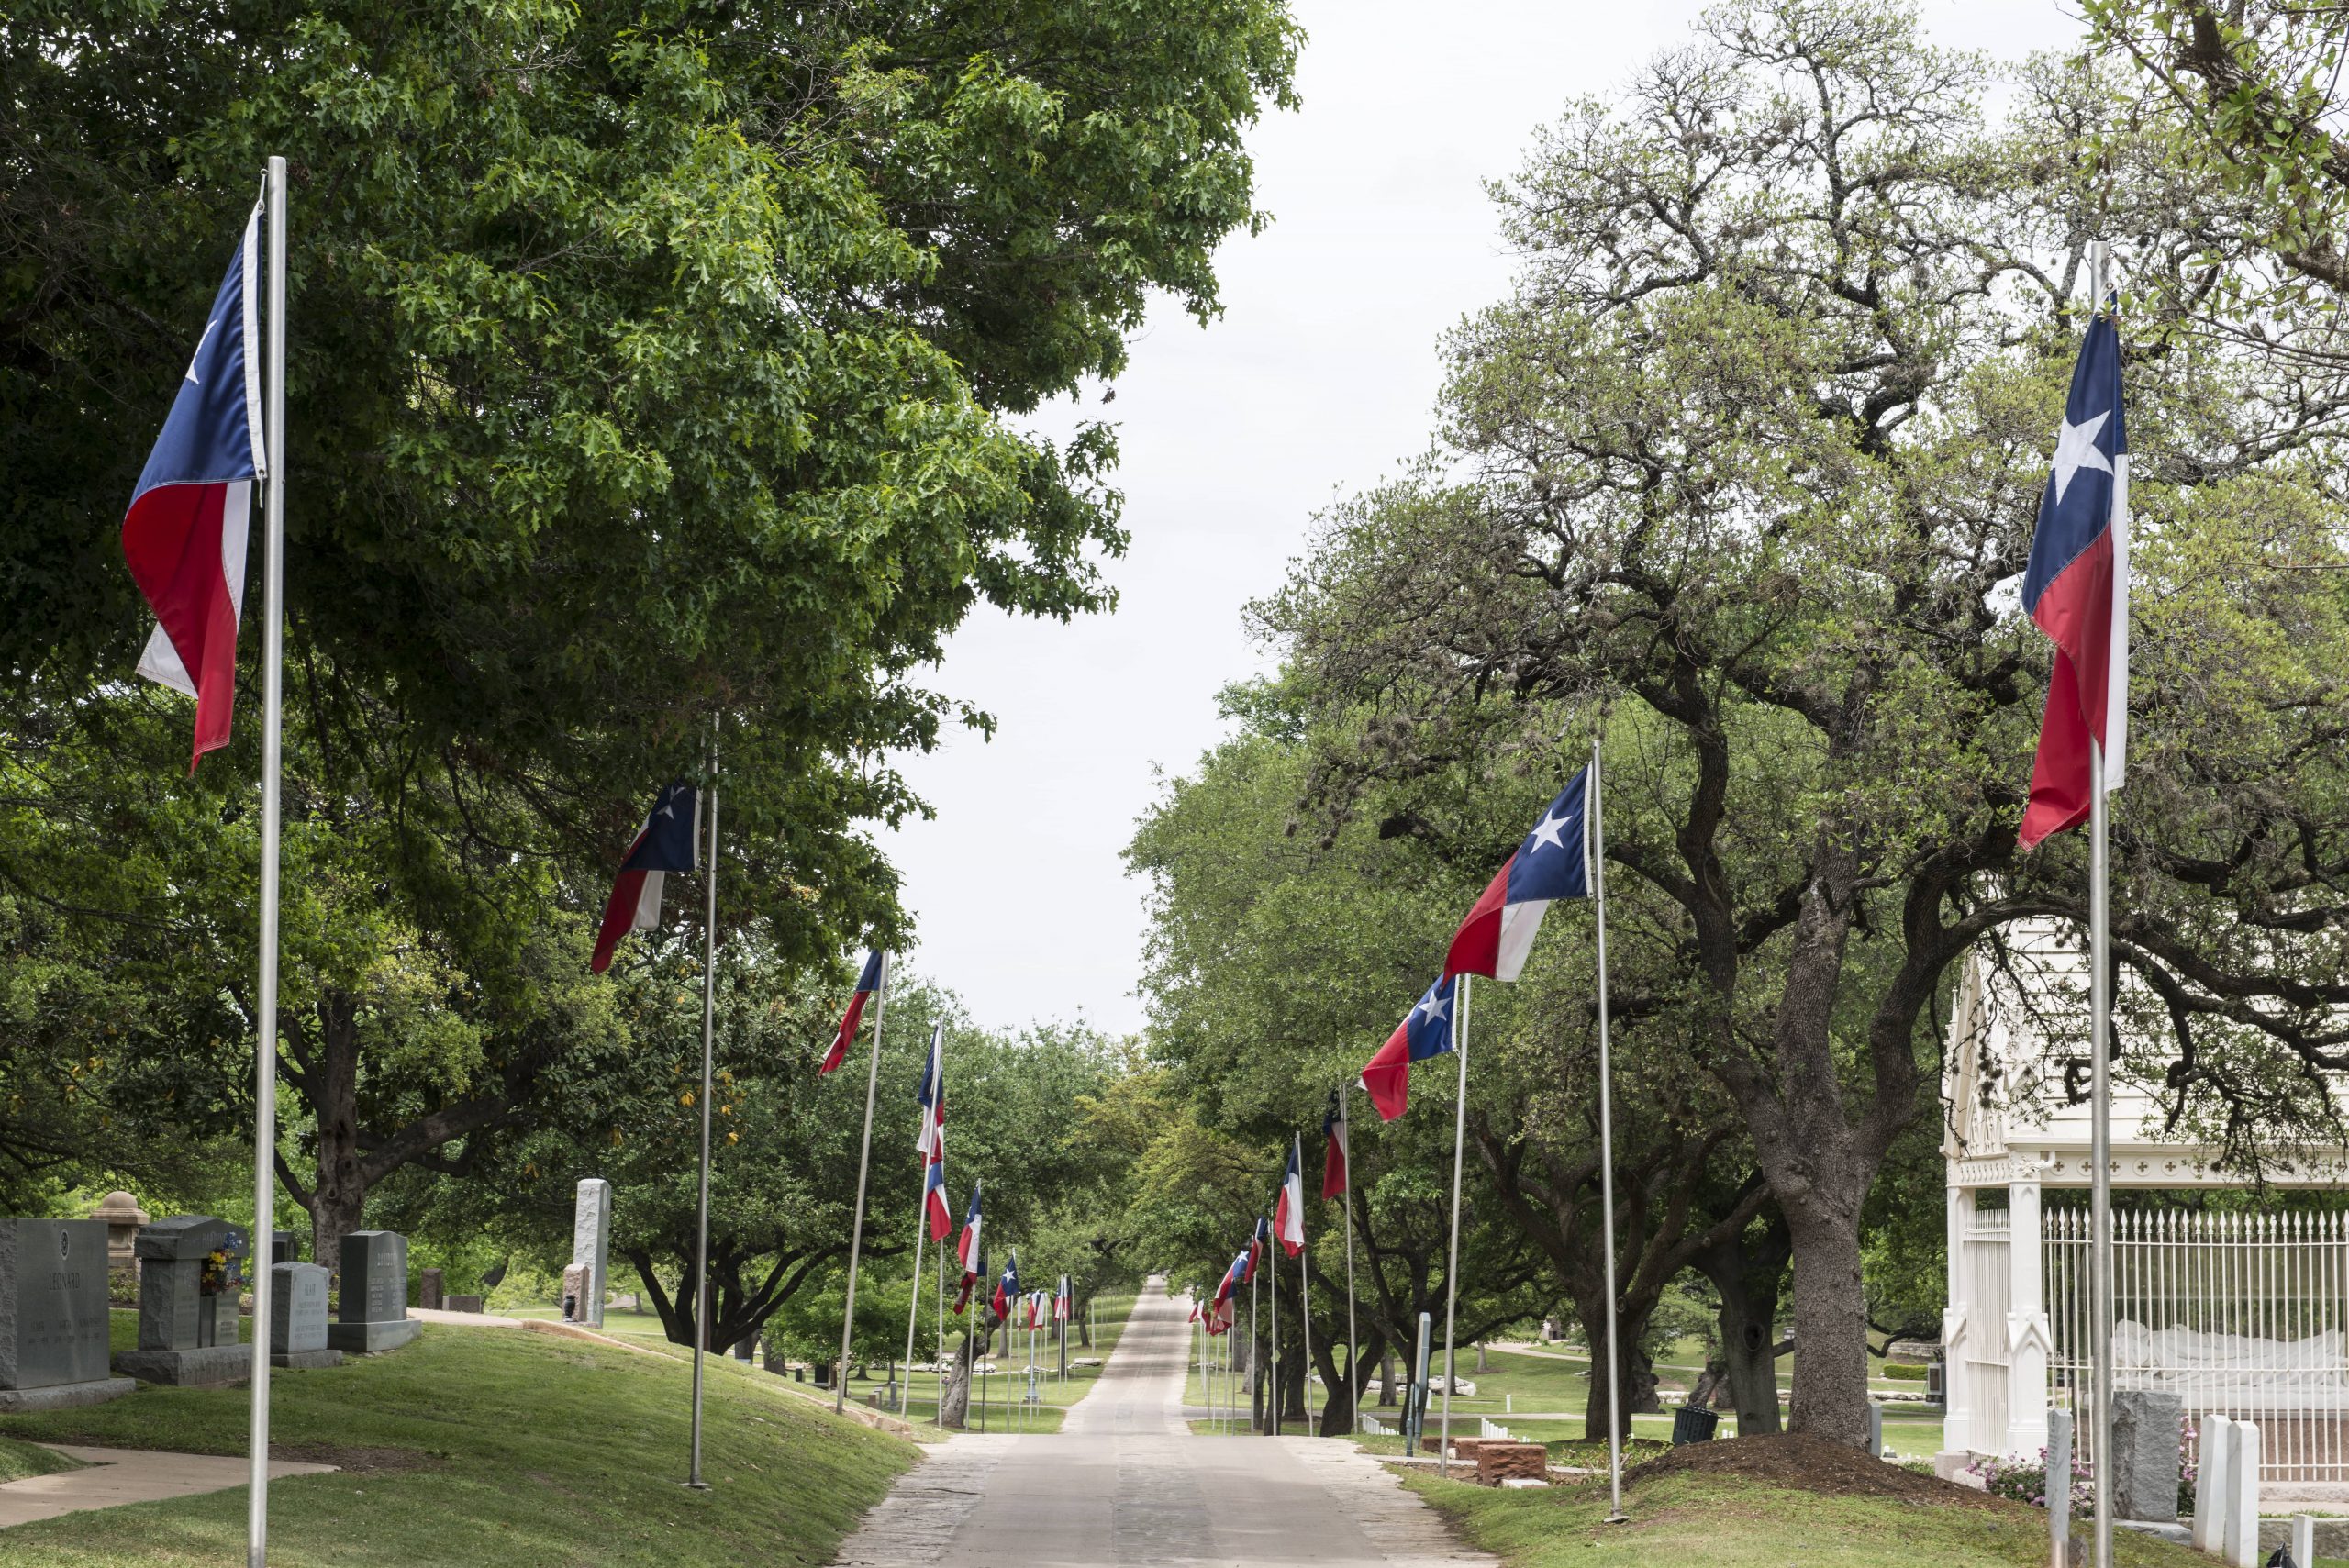 Texas State University admission